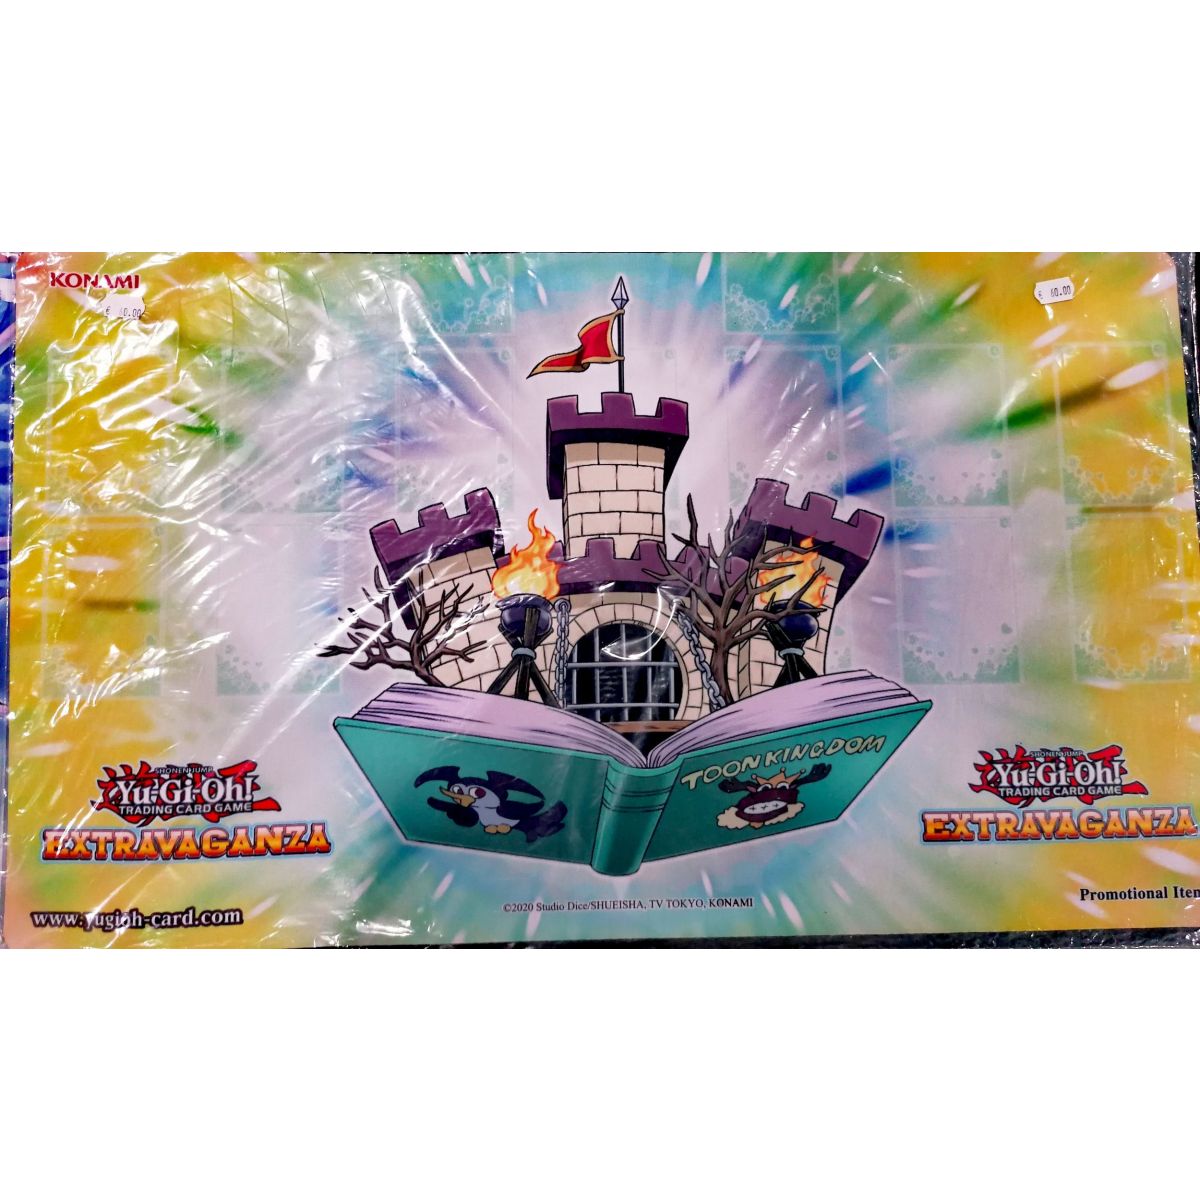 Item Yu-Gi-Oh! - Playmat - Extravaganza 2020 "Toon Kingdom"